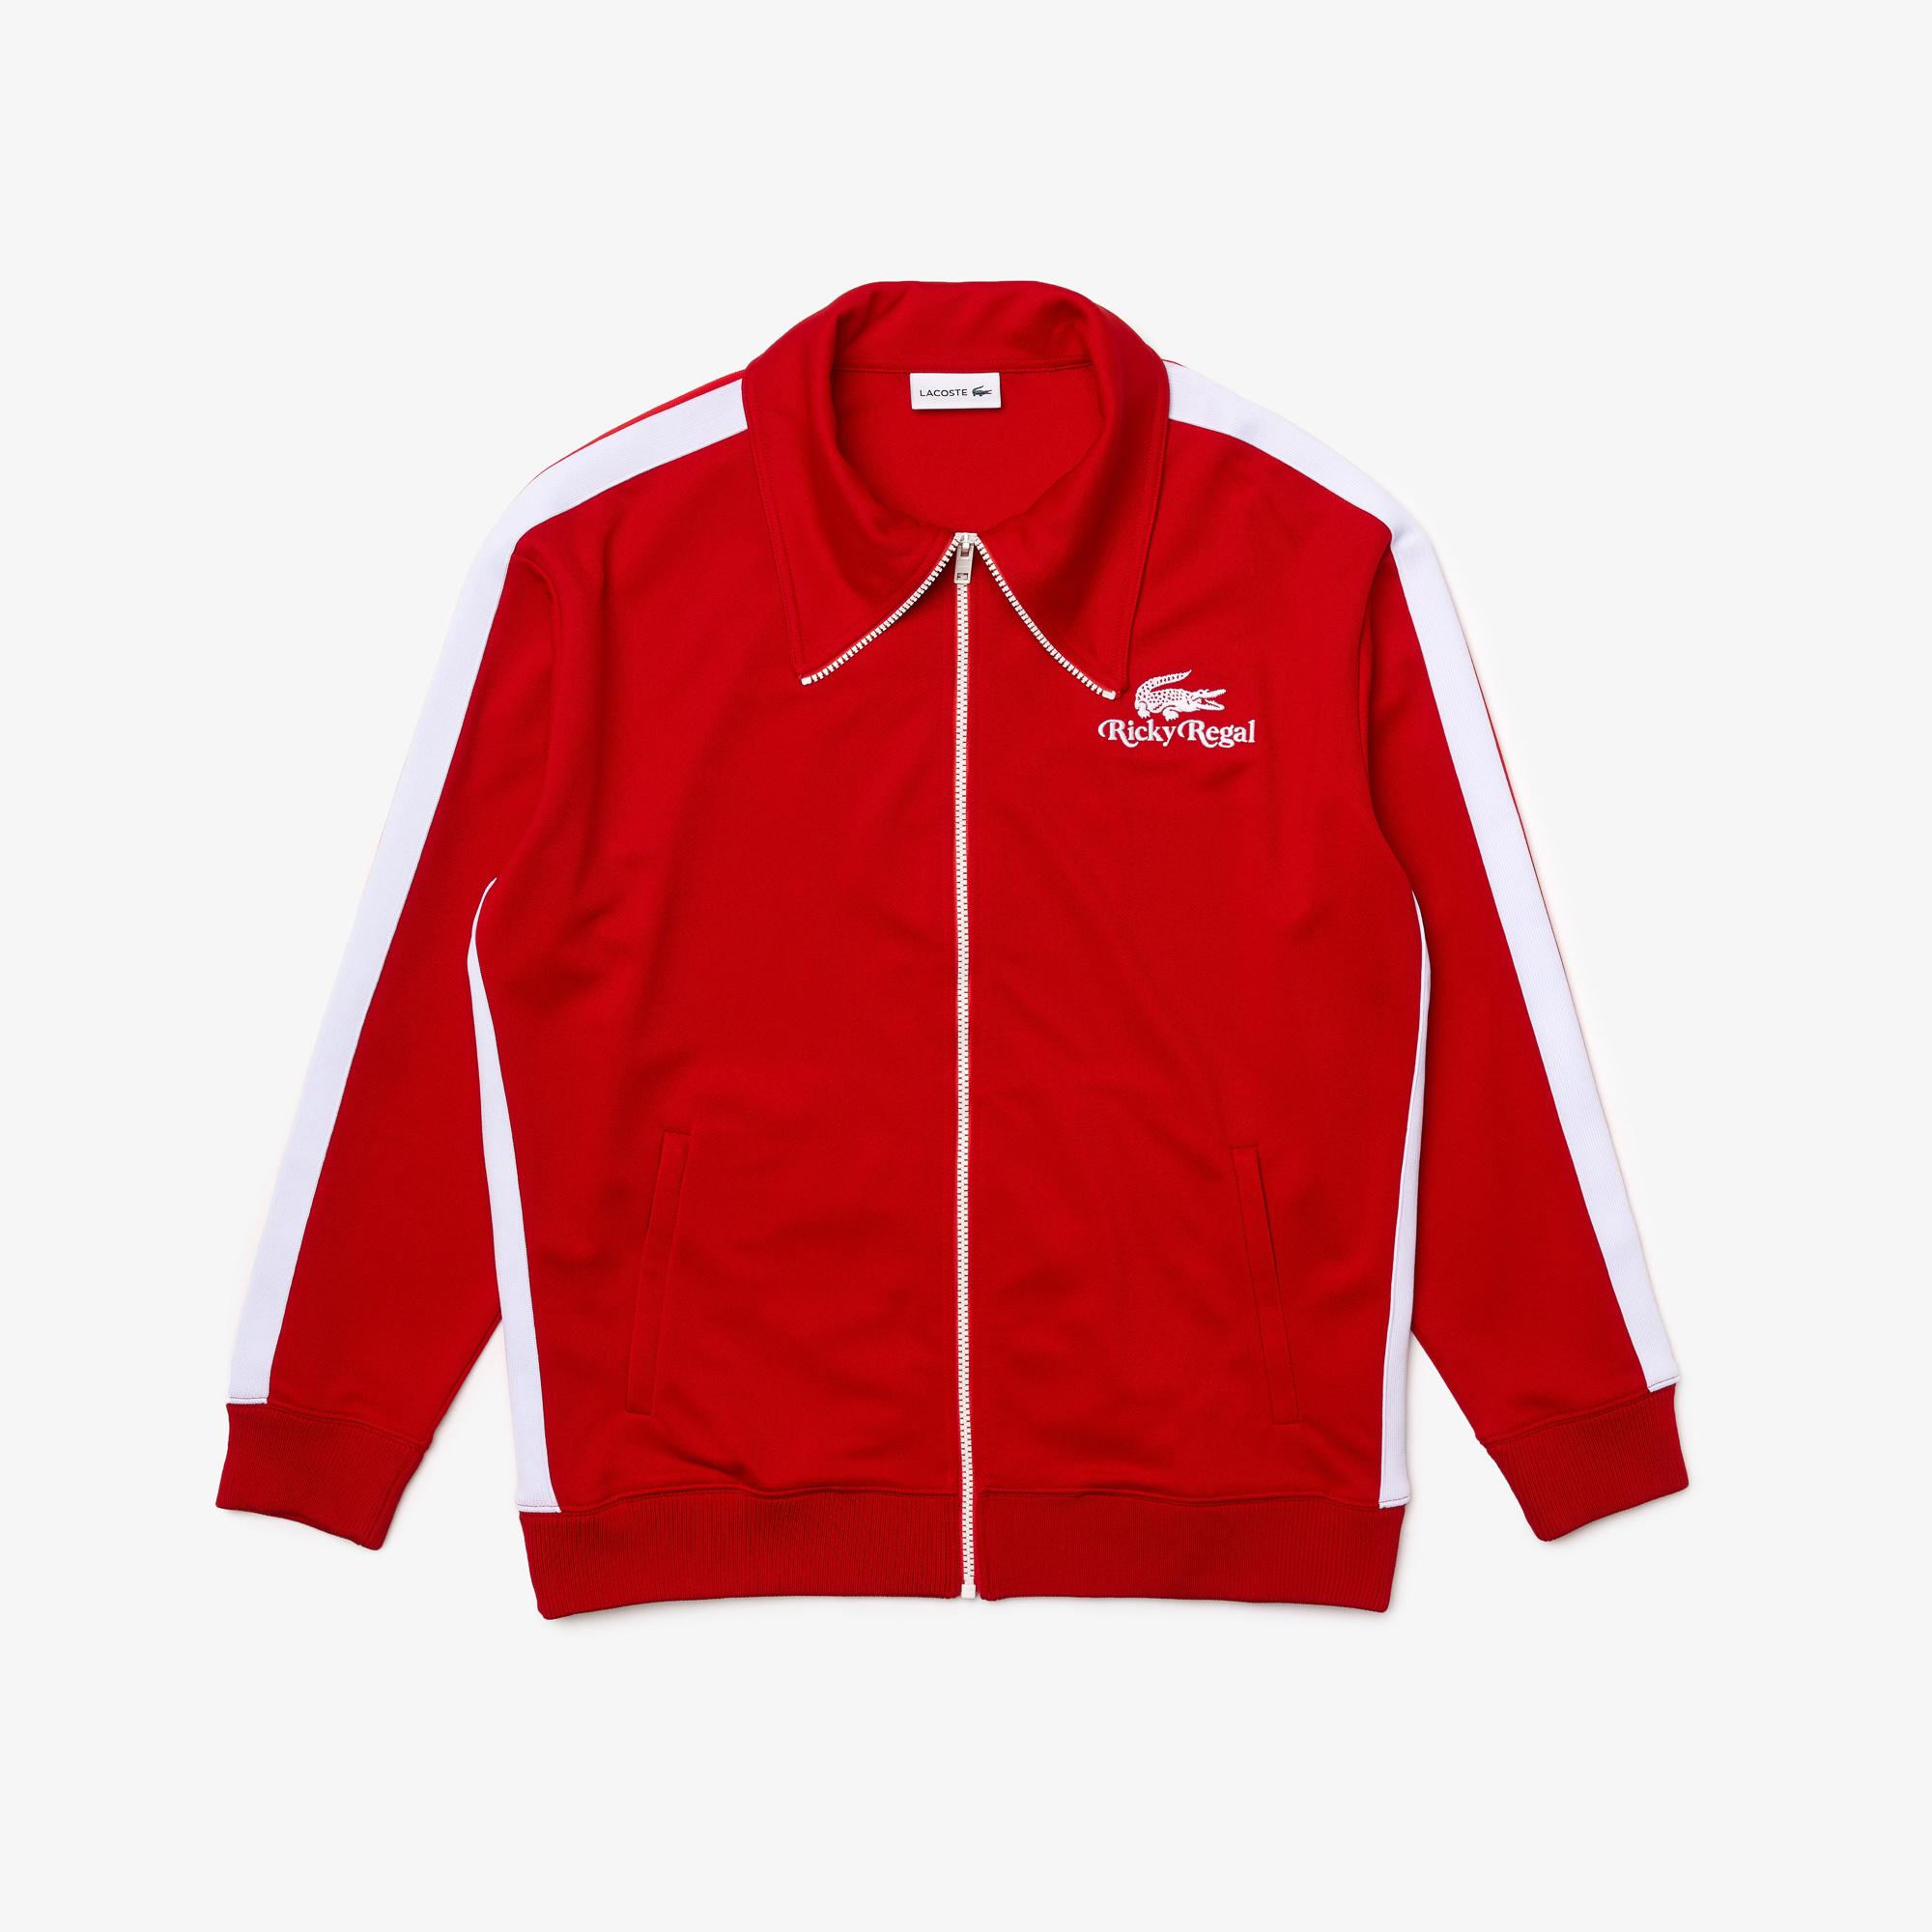 Lacoste x Ricky Regal Unisex Fermuarlı Kırmızı Sweatshirt. 6